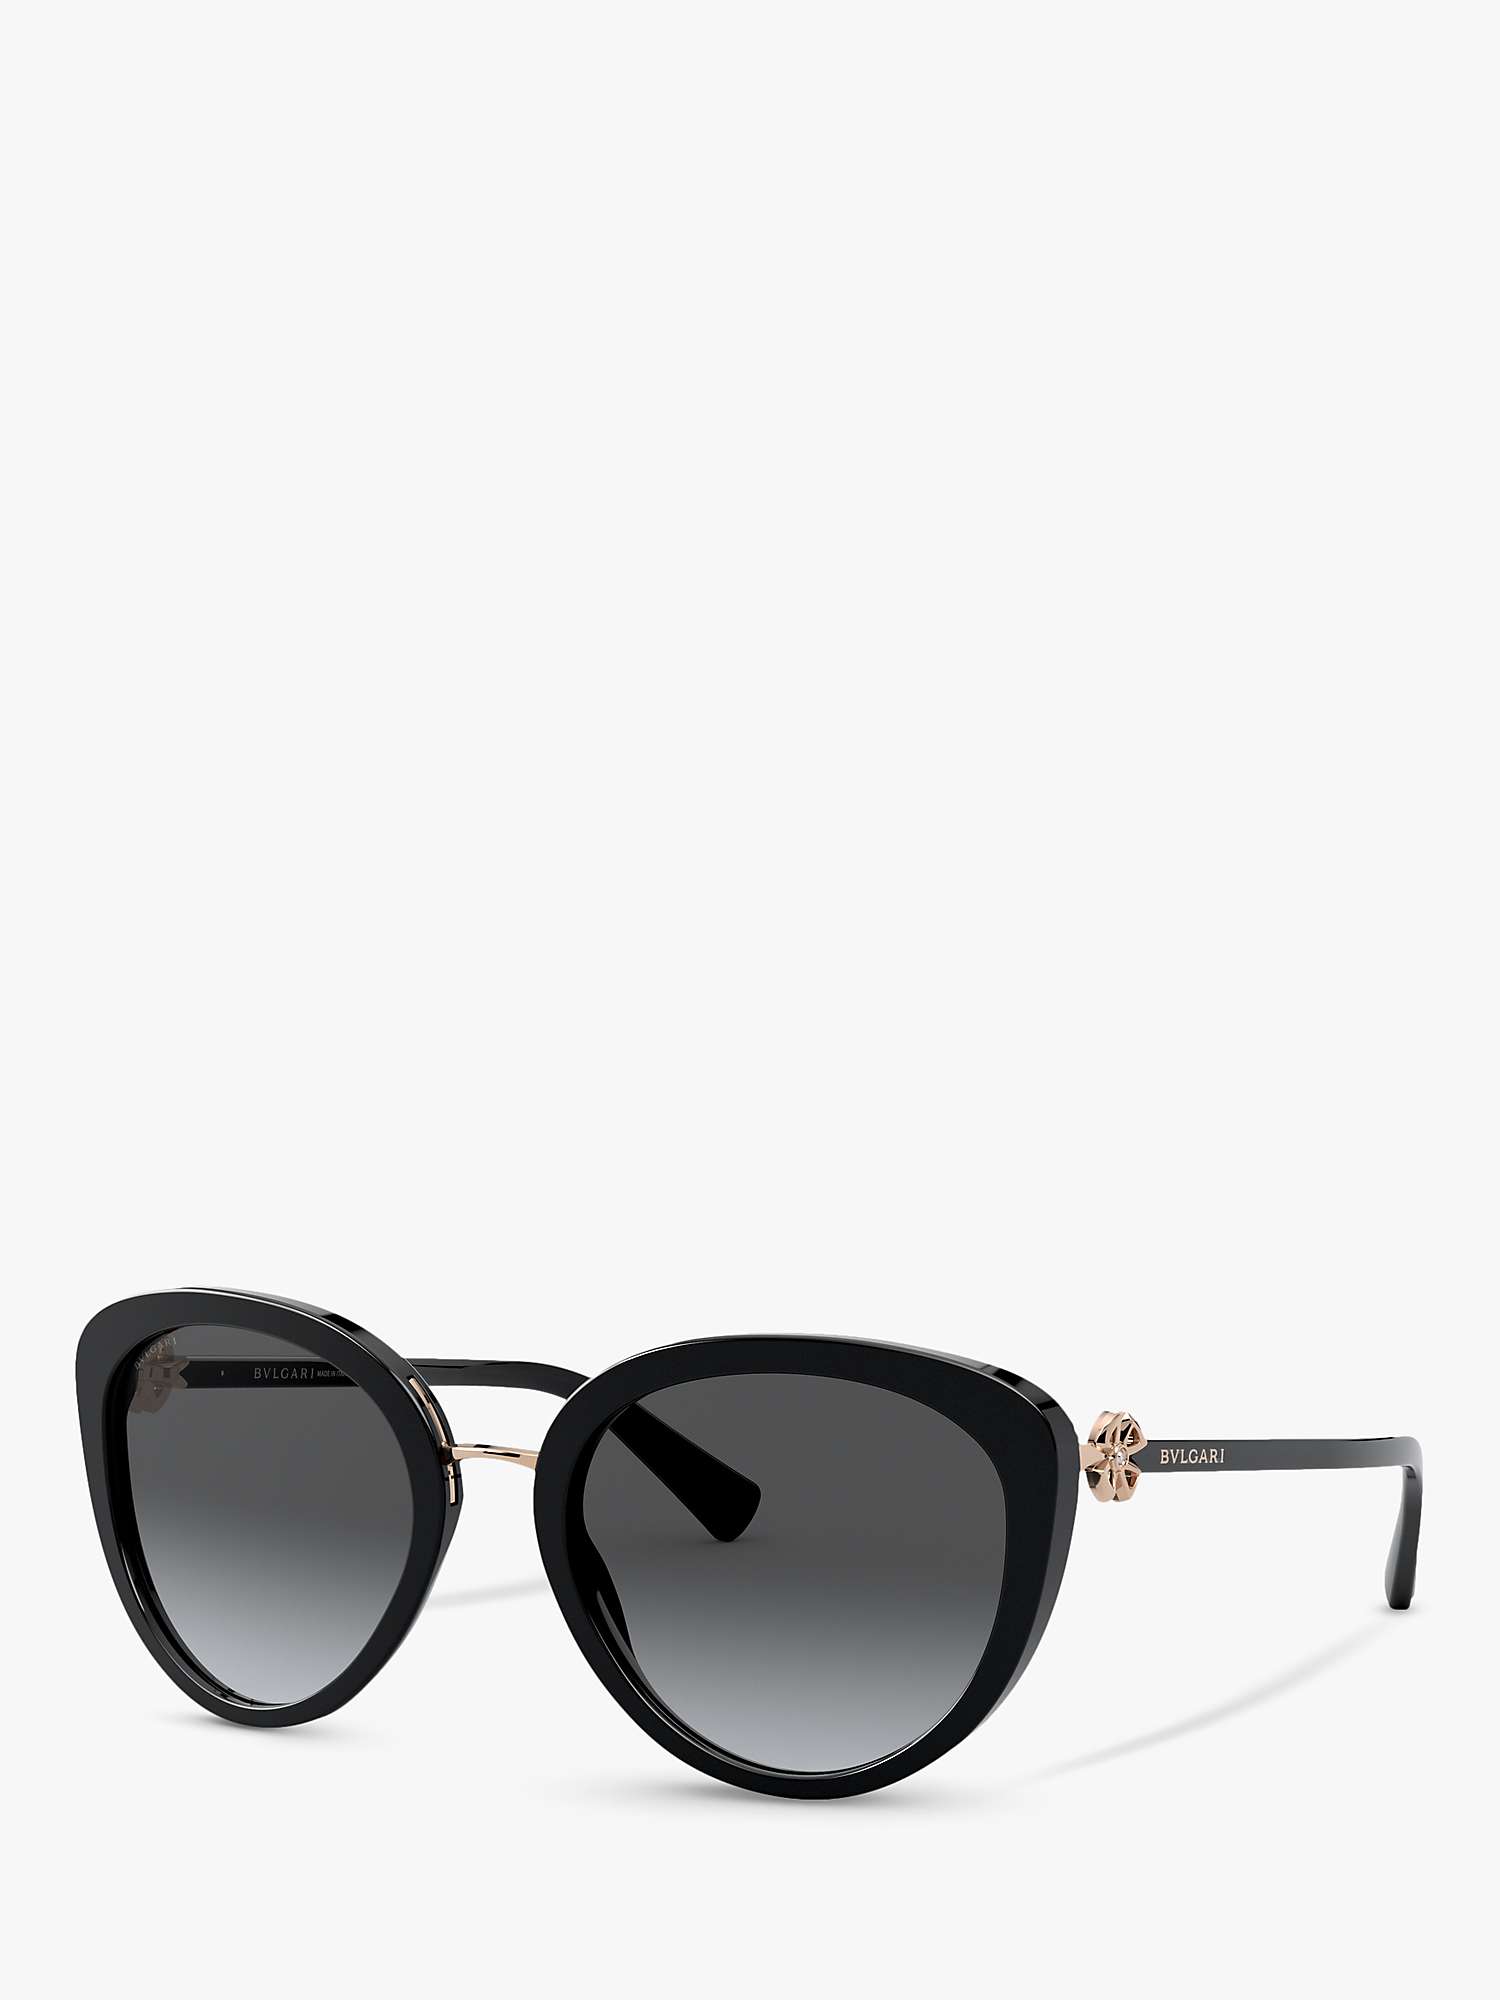 Buy BVLGARI BV8226B Women's Oval Sunglasses, Black Online at johnlewis.com